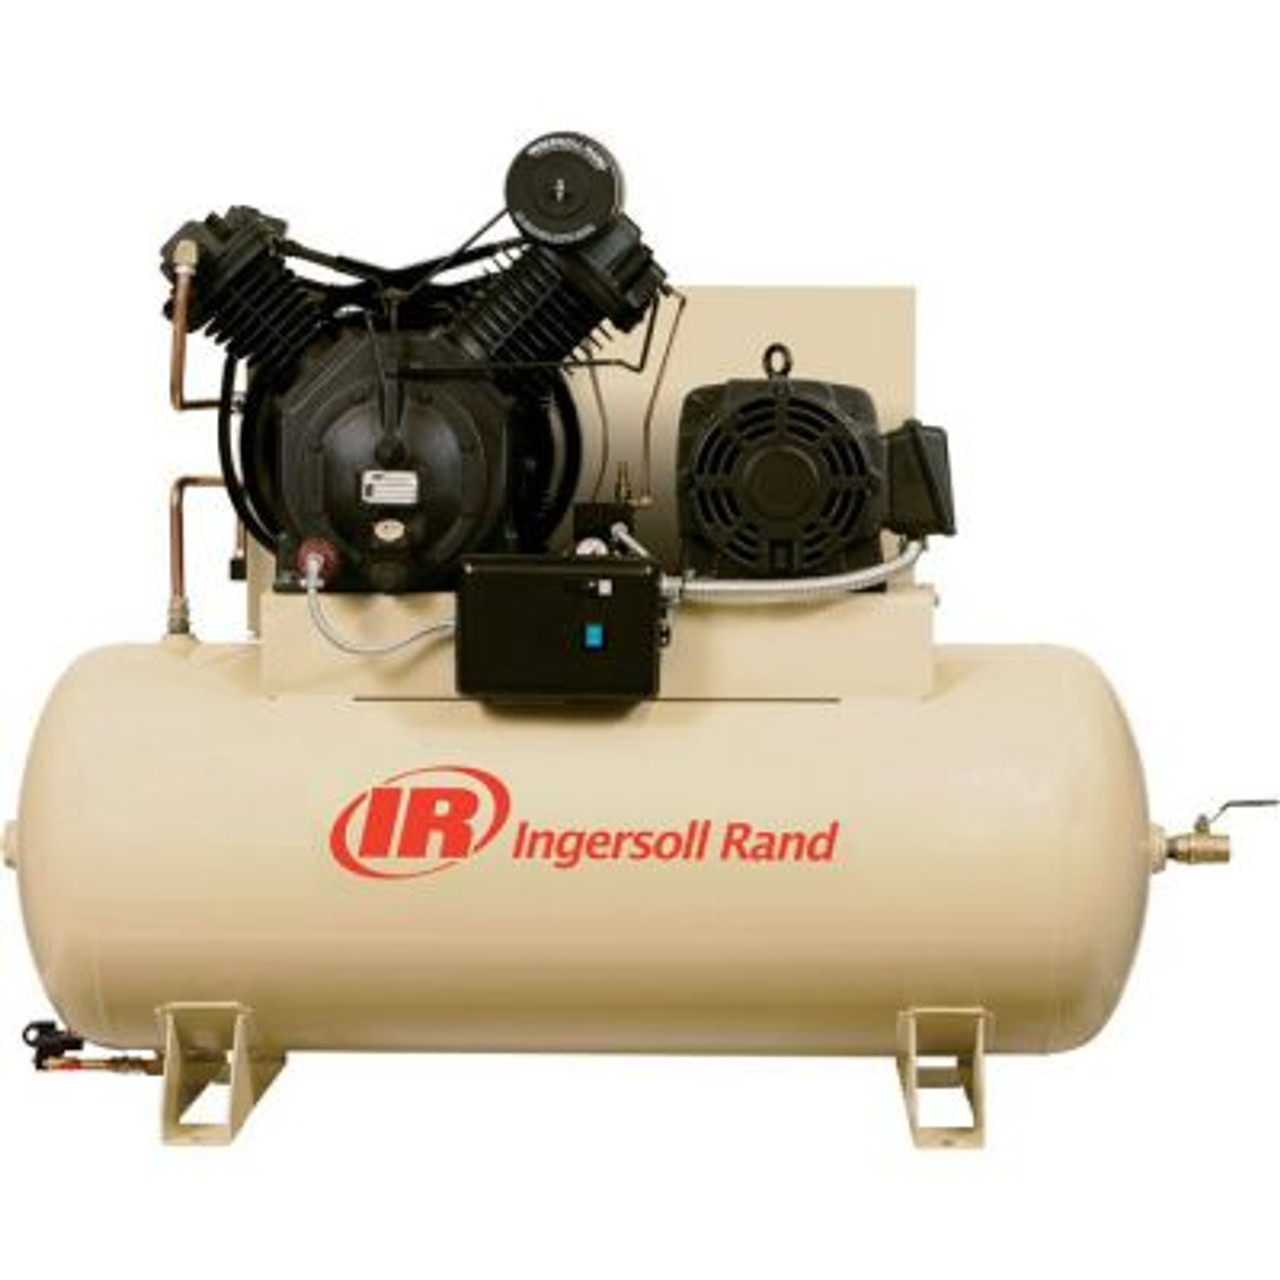 Ingersoll Rand Pressure Lubricated 2 Stage Compressor 7.5 HP  80 Gal Horizontal Tank